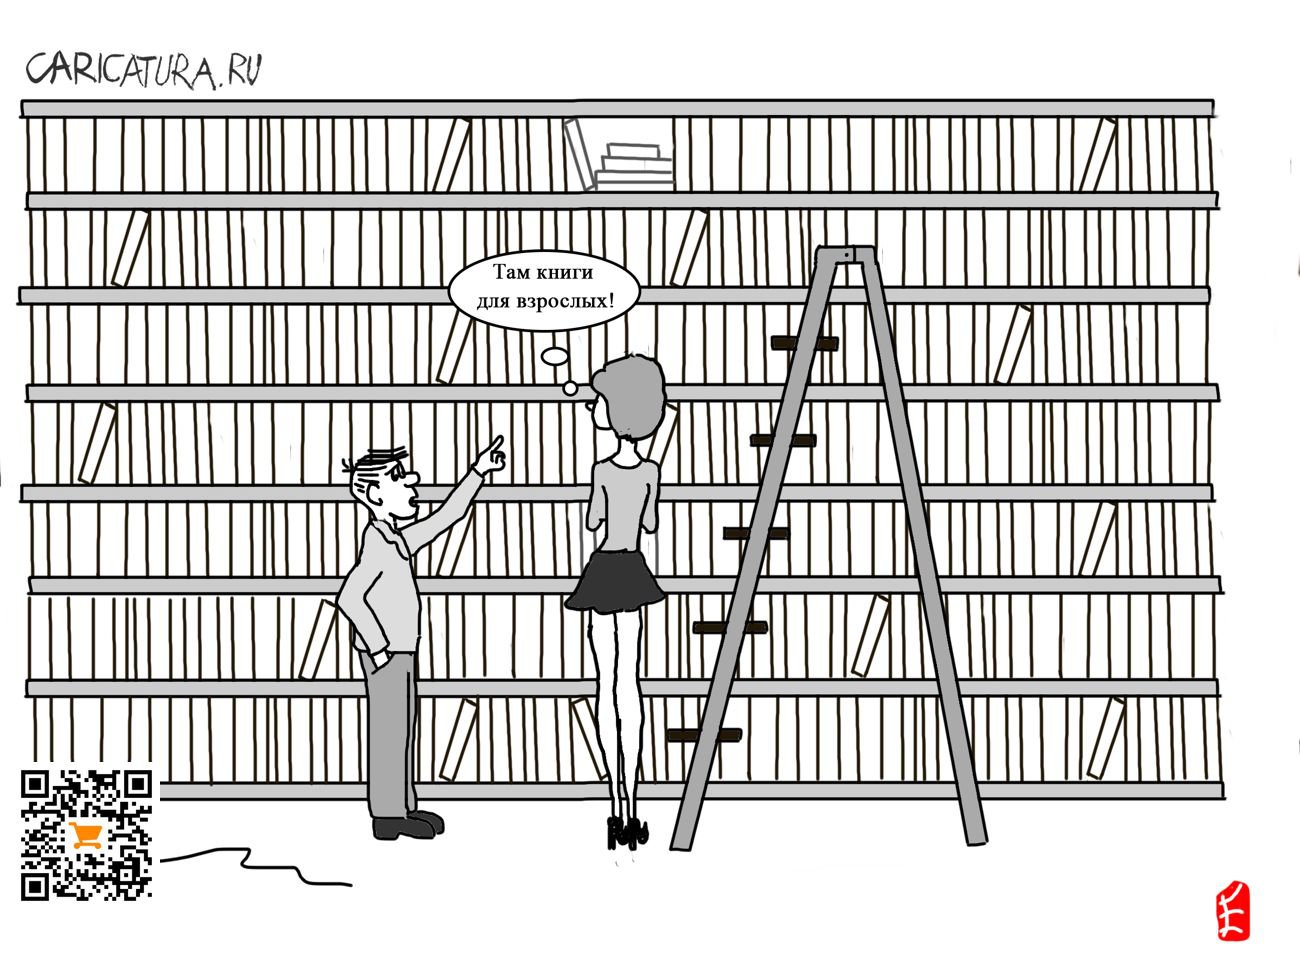 Карикатура "В библиотеке", Евгений Лапин